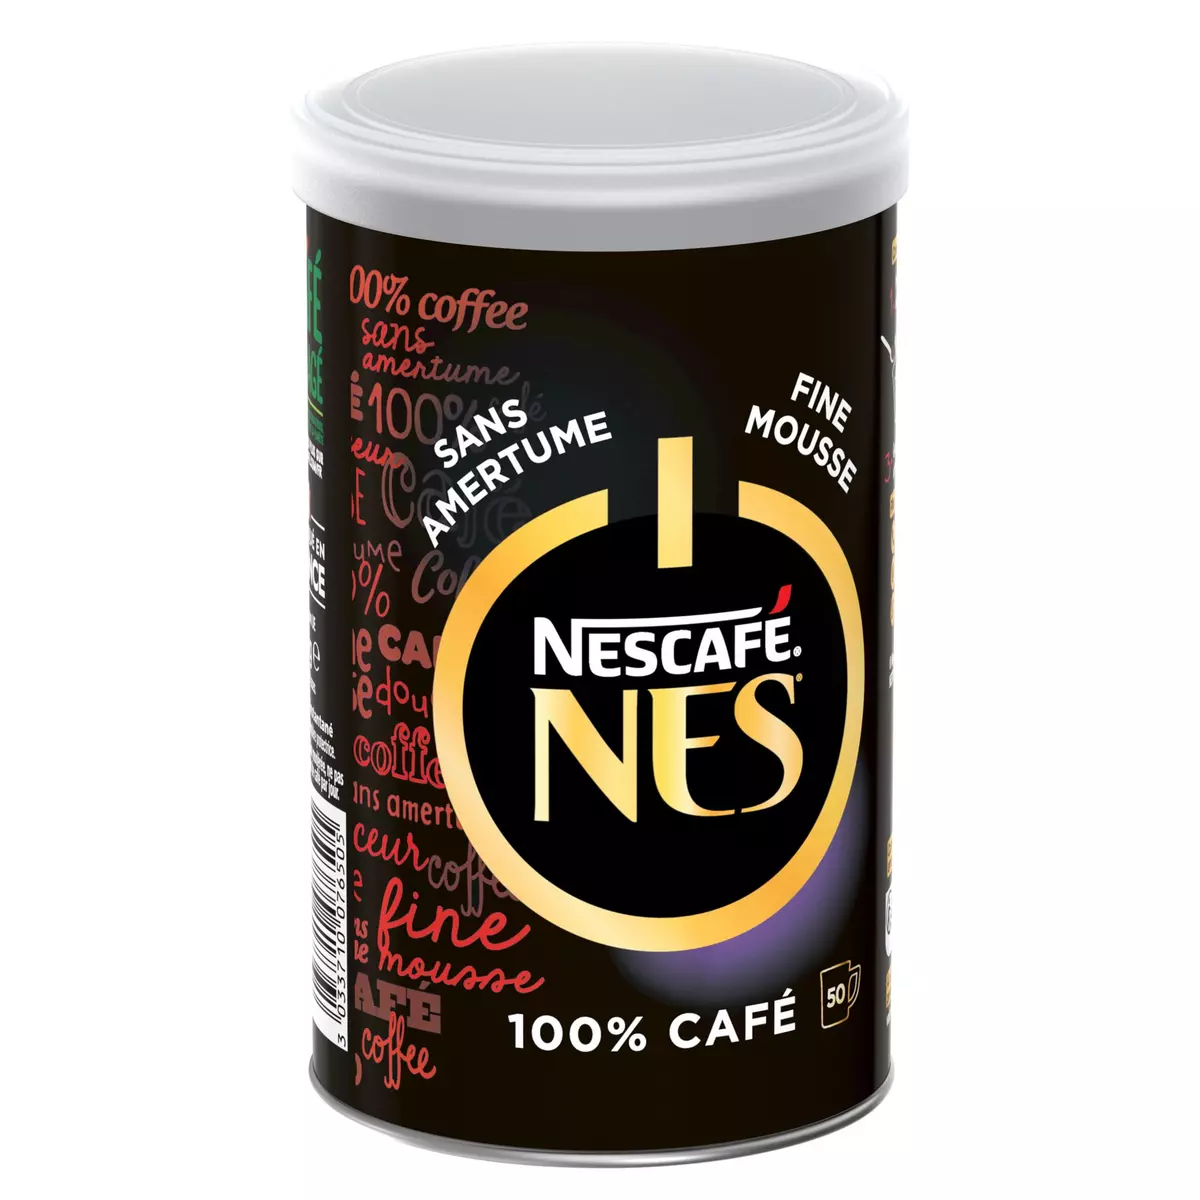 NESCAFE Nes café soluble sans amertume 50 tasses 100g